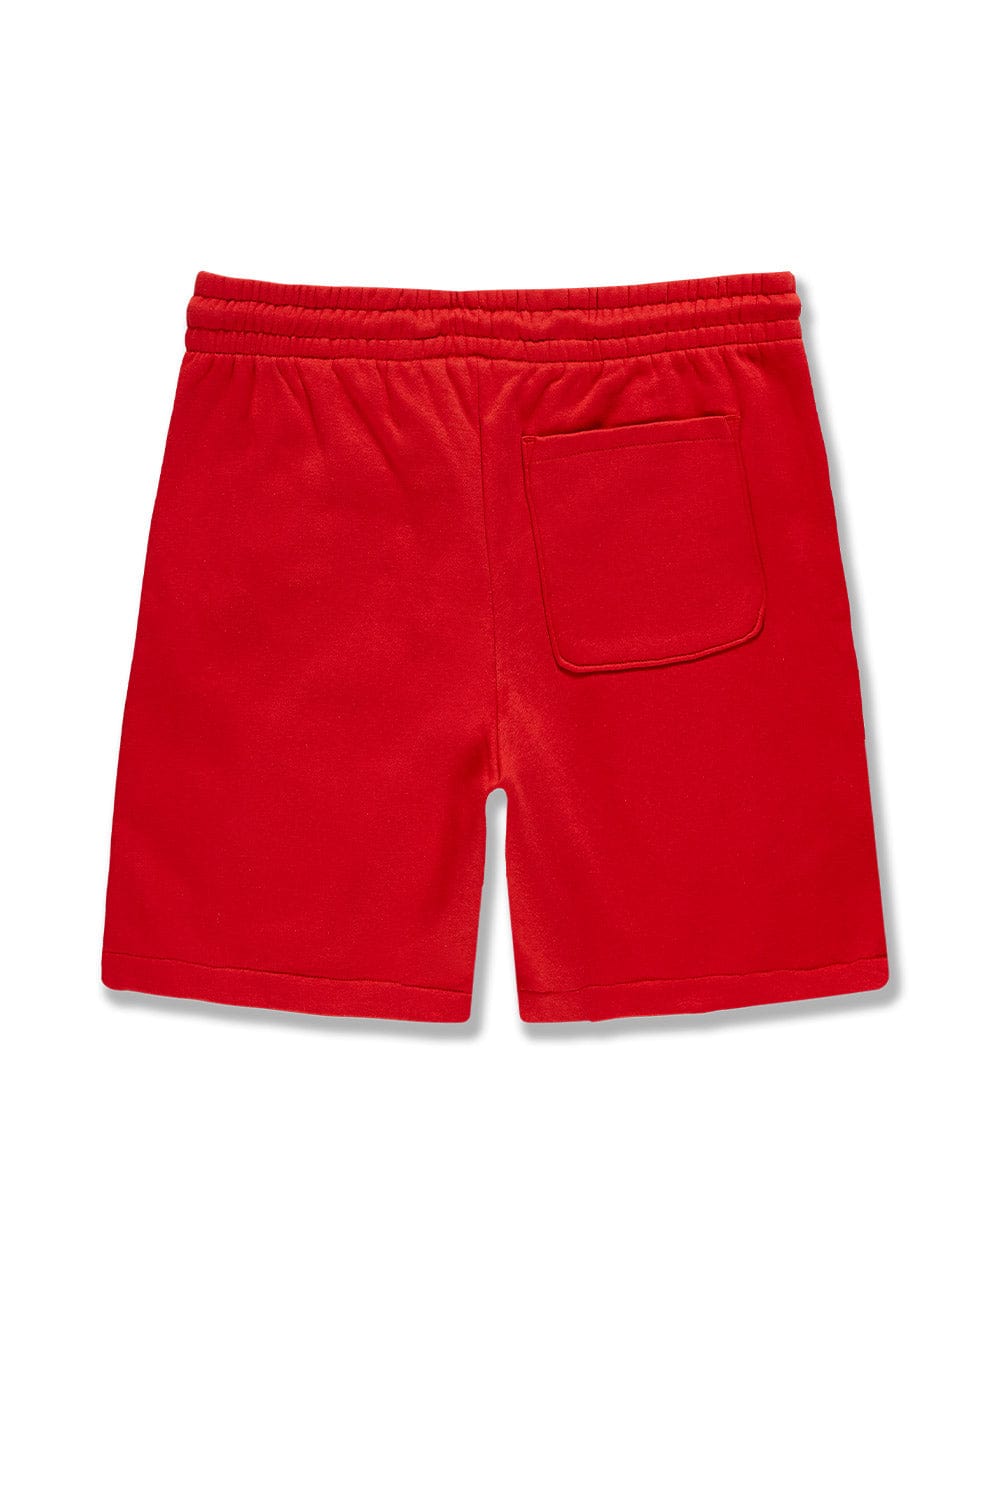 JC Big Men Big Men's Retro Paradise Tonal Shorts (Red)